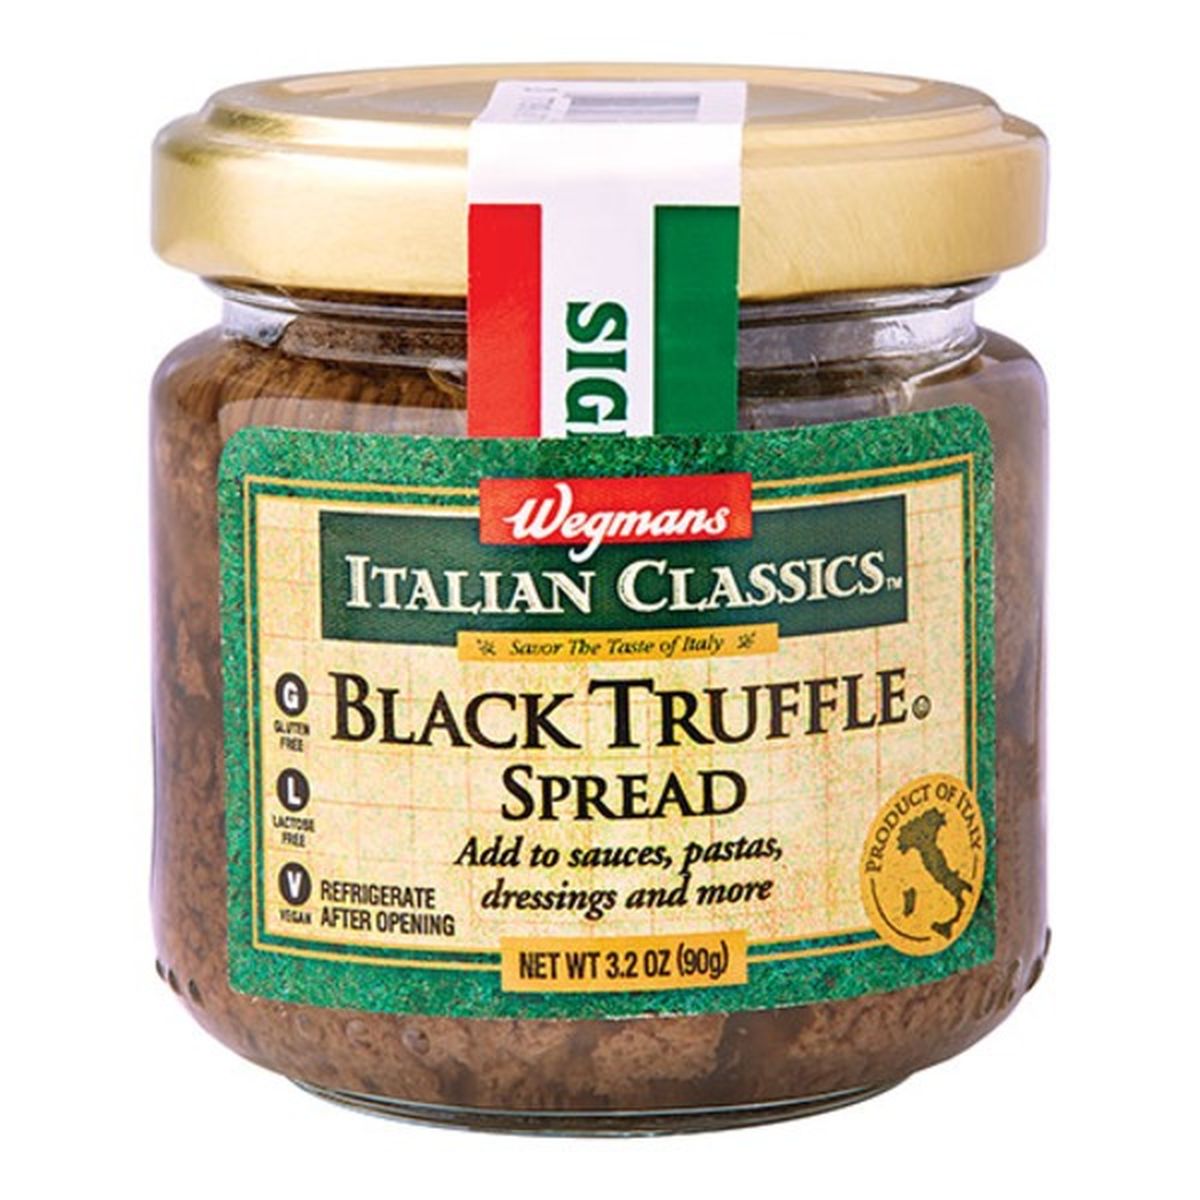 Calories in Wegmans Italian Classics Black Truffle Spread